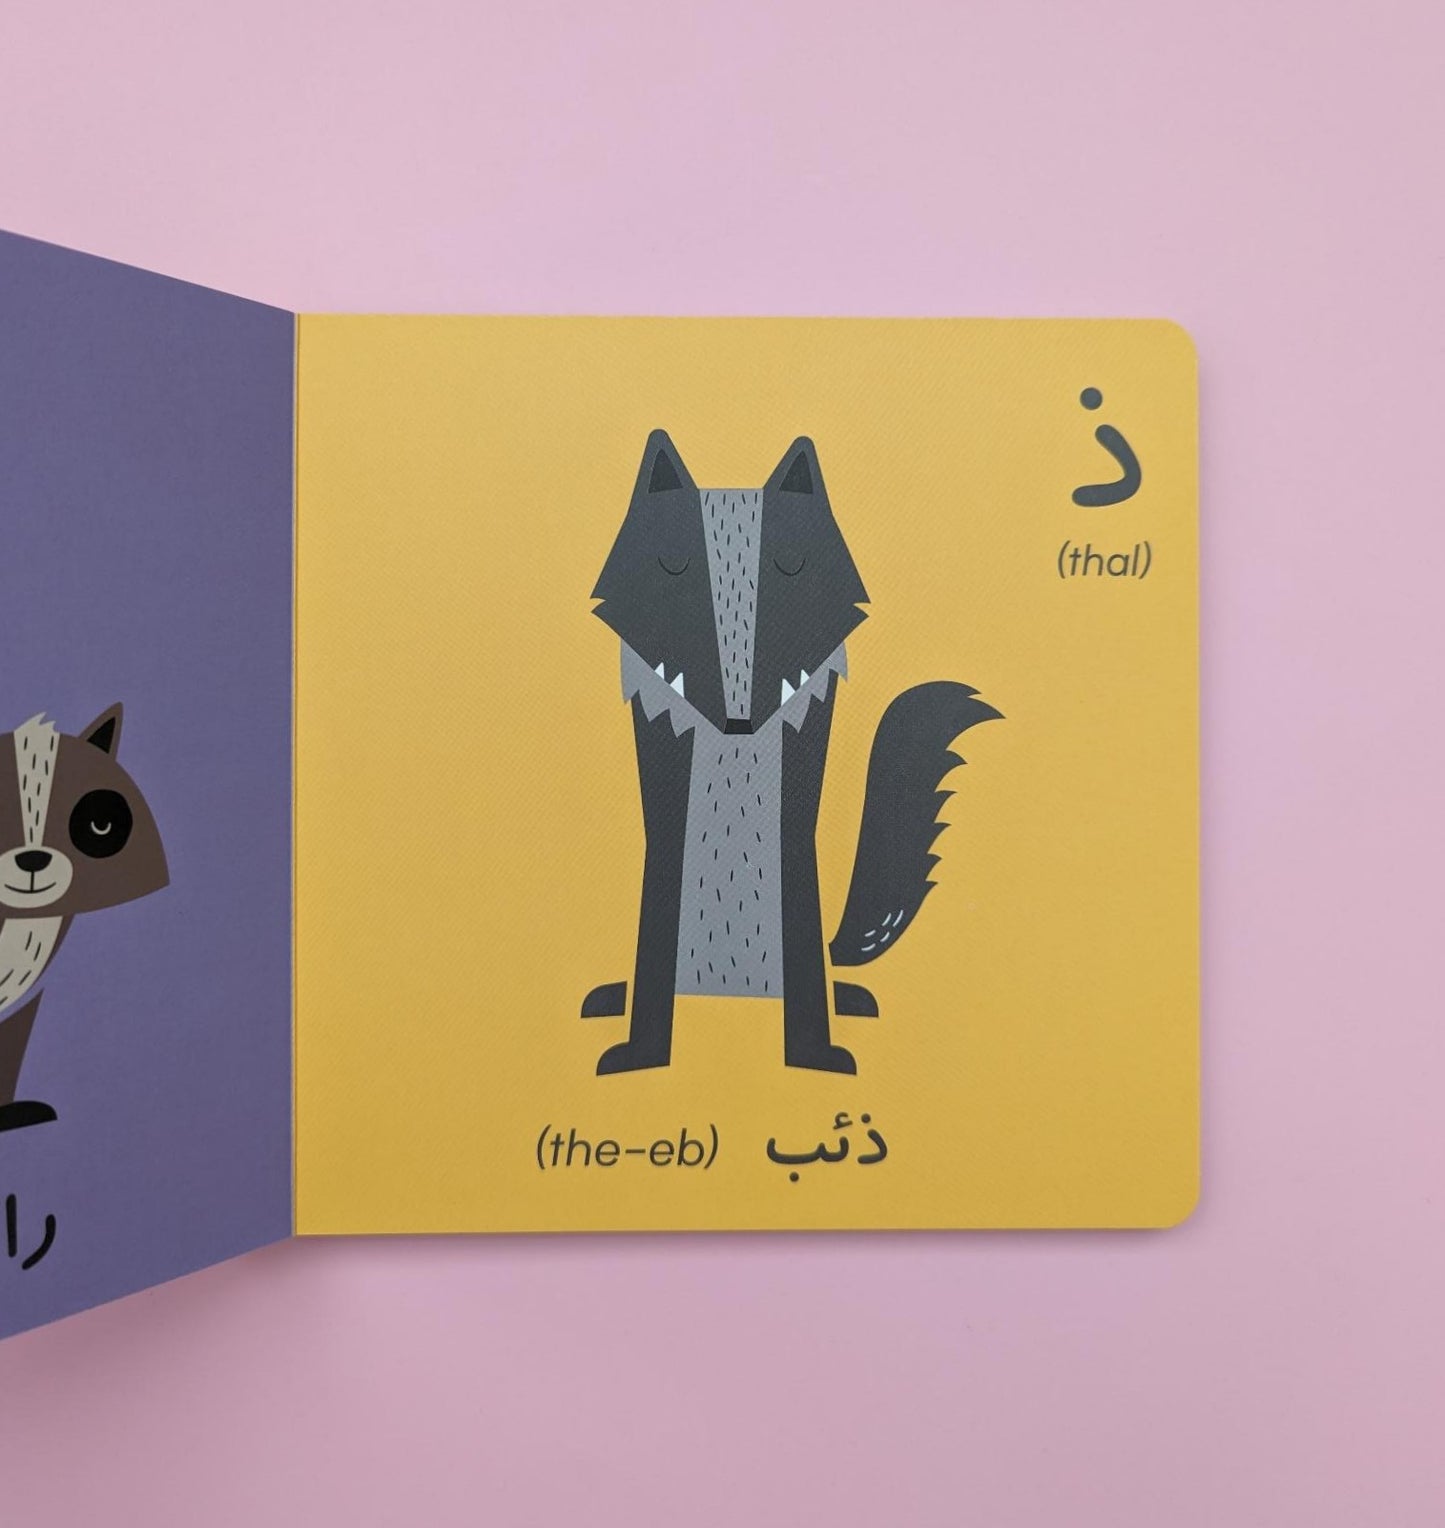 The Arabic Alphabet & The World of Animals - الأحرف العربية وعالم الحيوانات